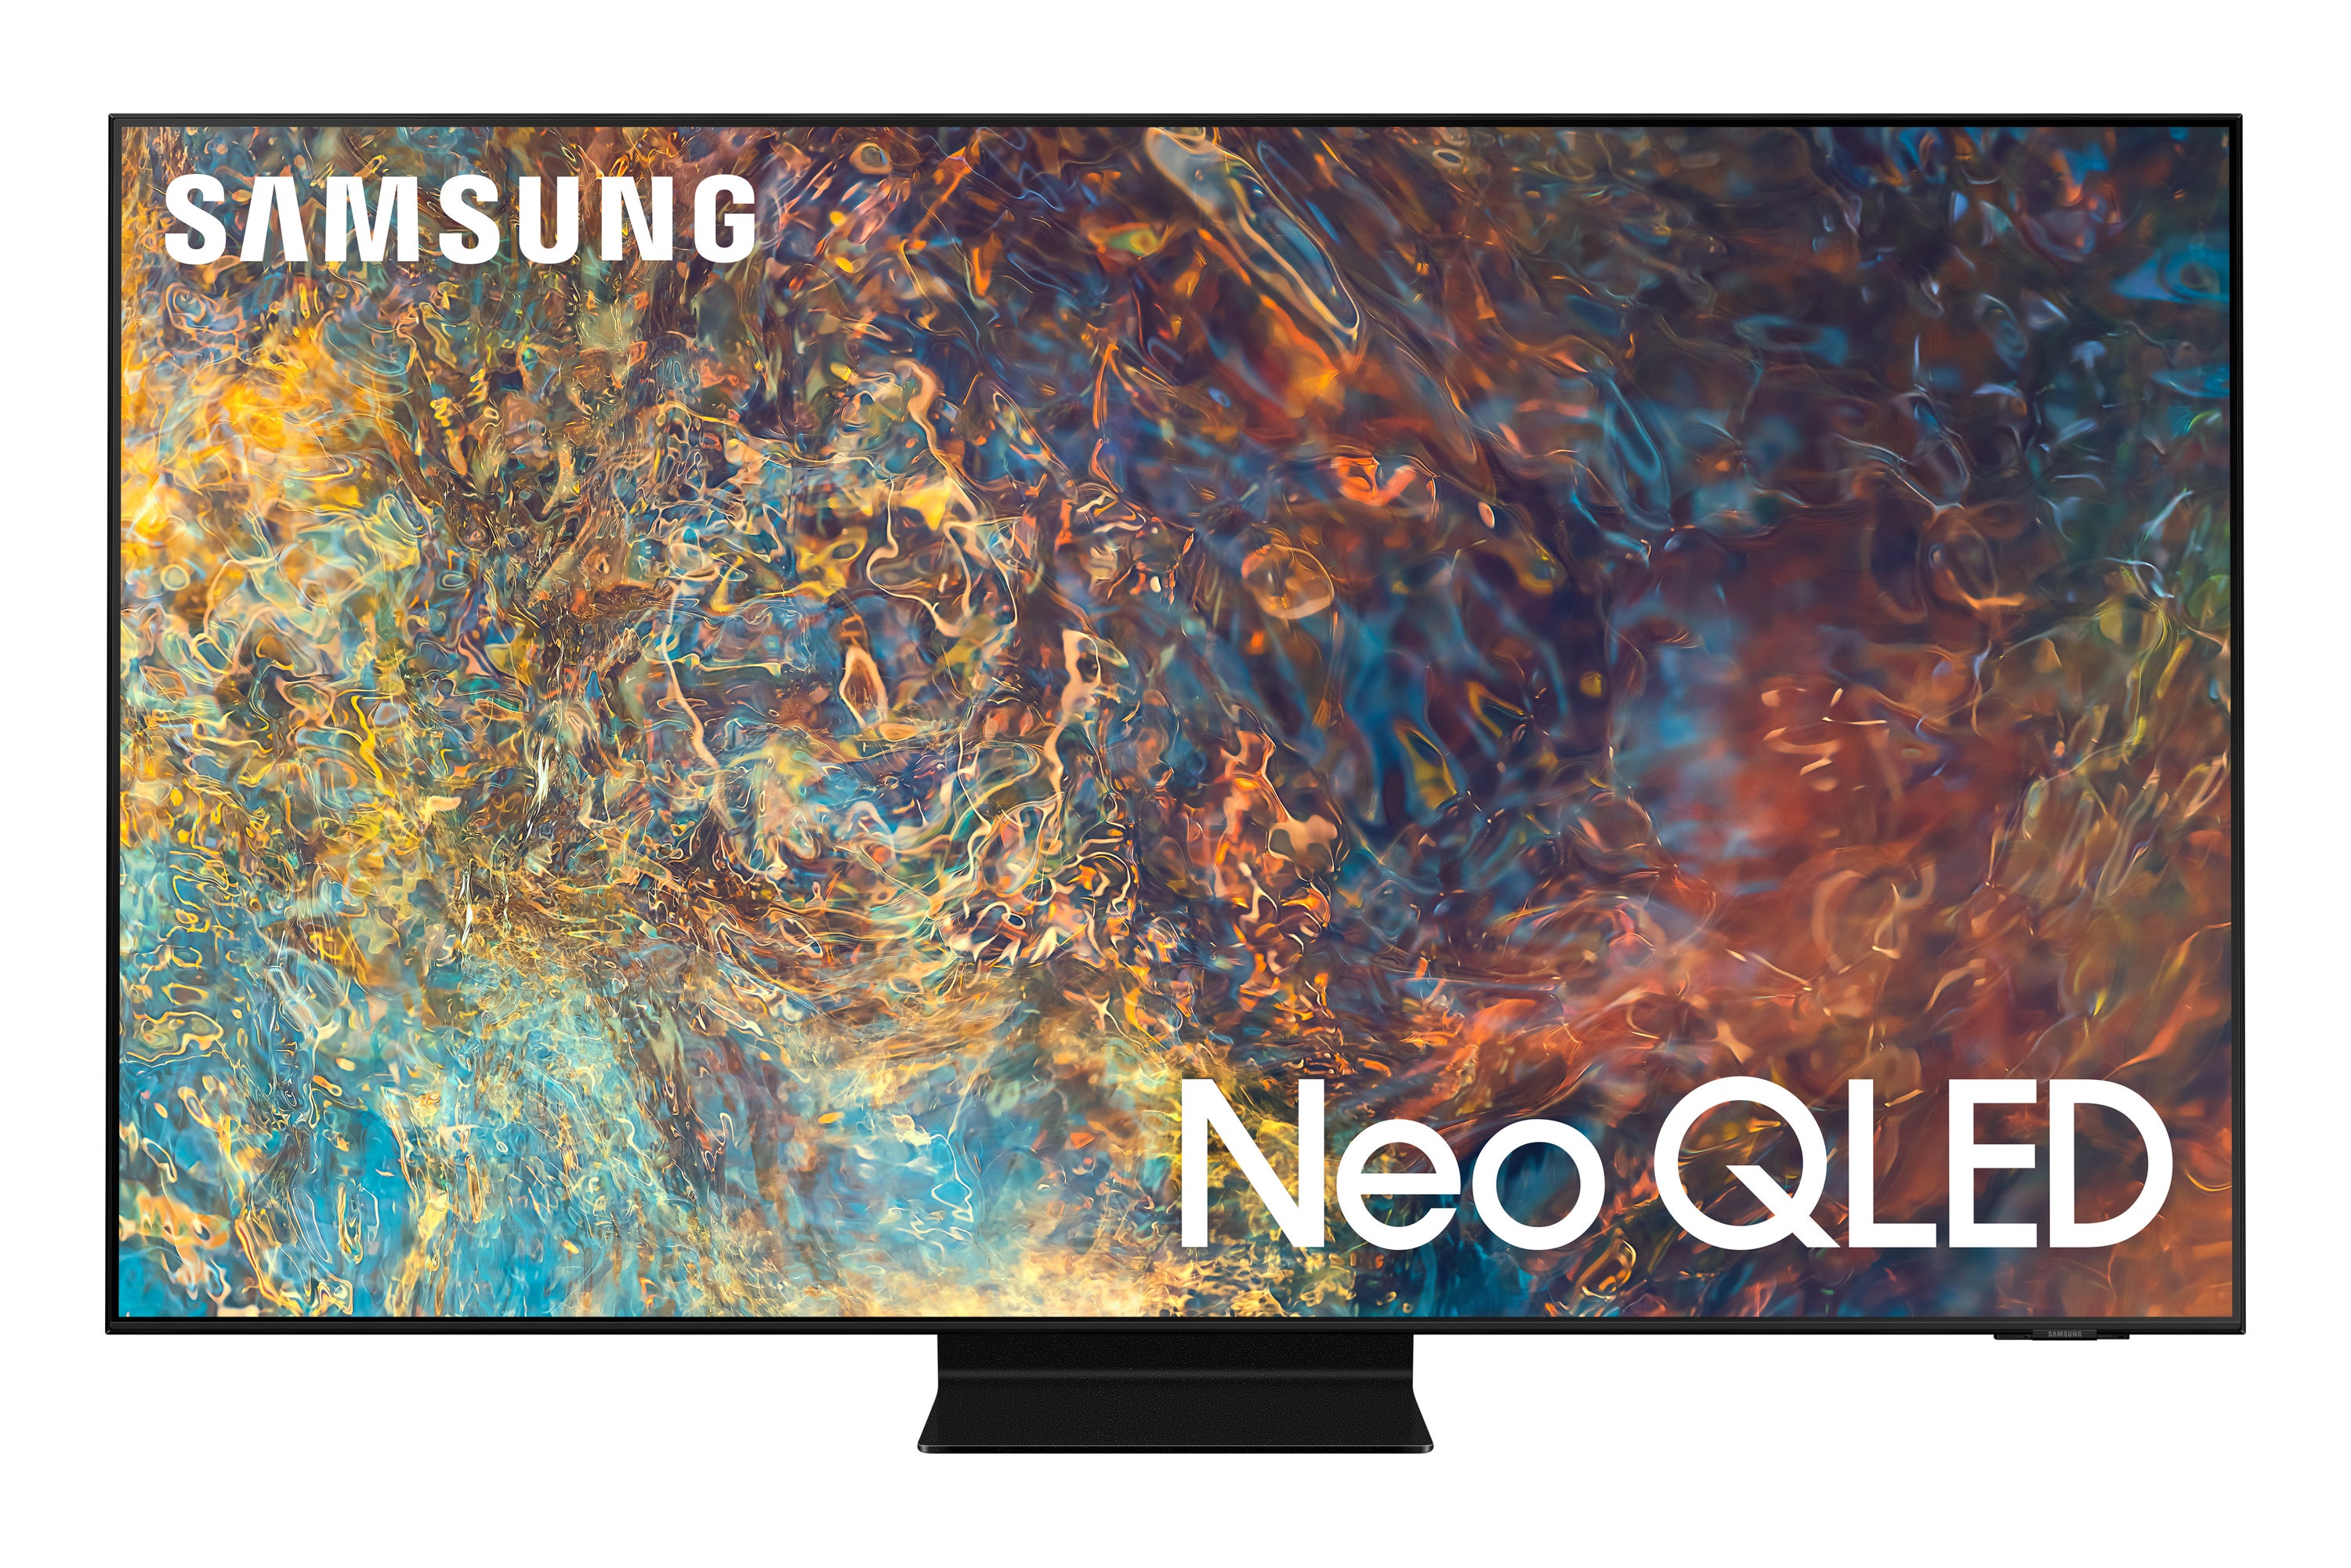 Restored Samsung 65" Class 4K (2160p) Smart QLED TV (QN65QN90AAFXZA) (Refurbished) - image 1 of 3